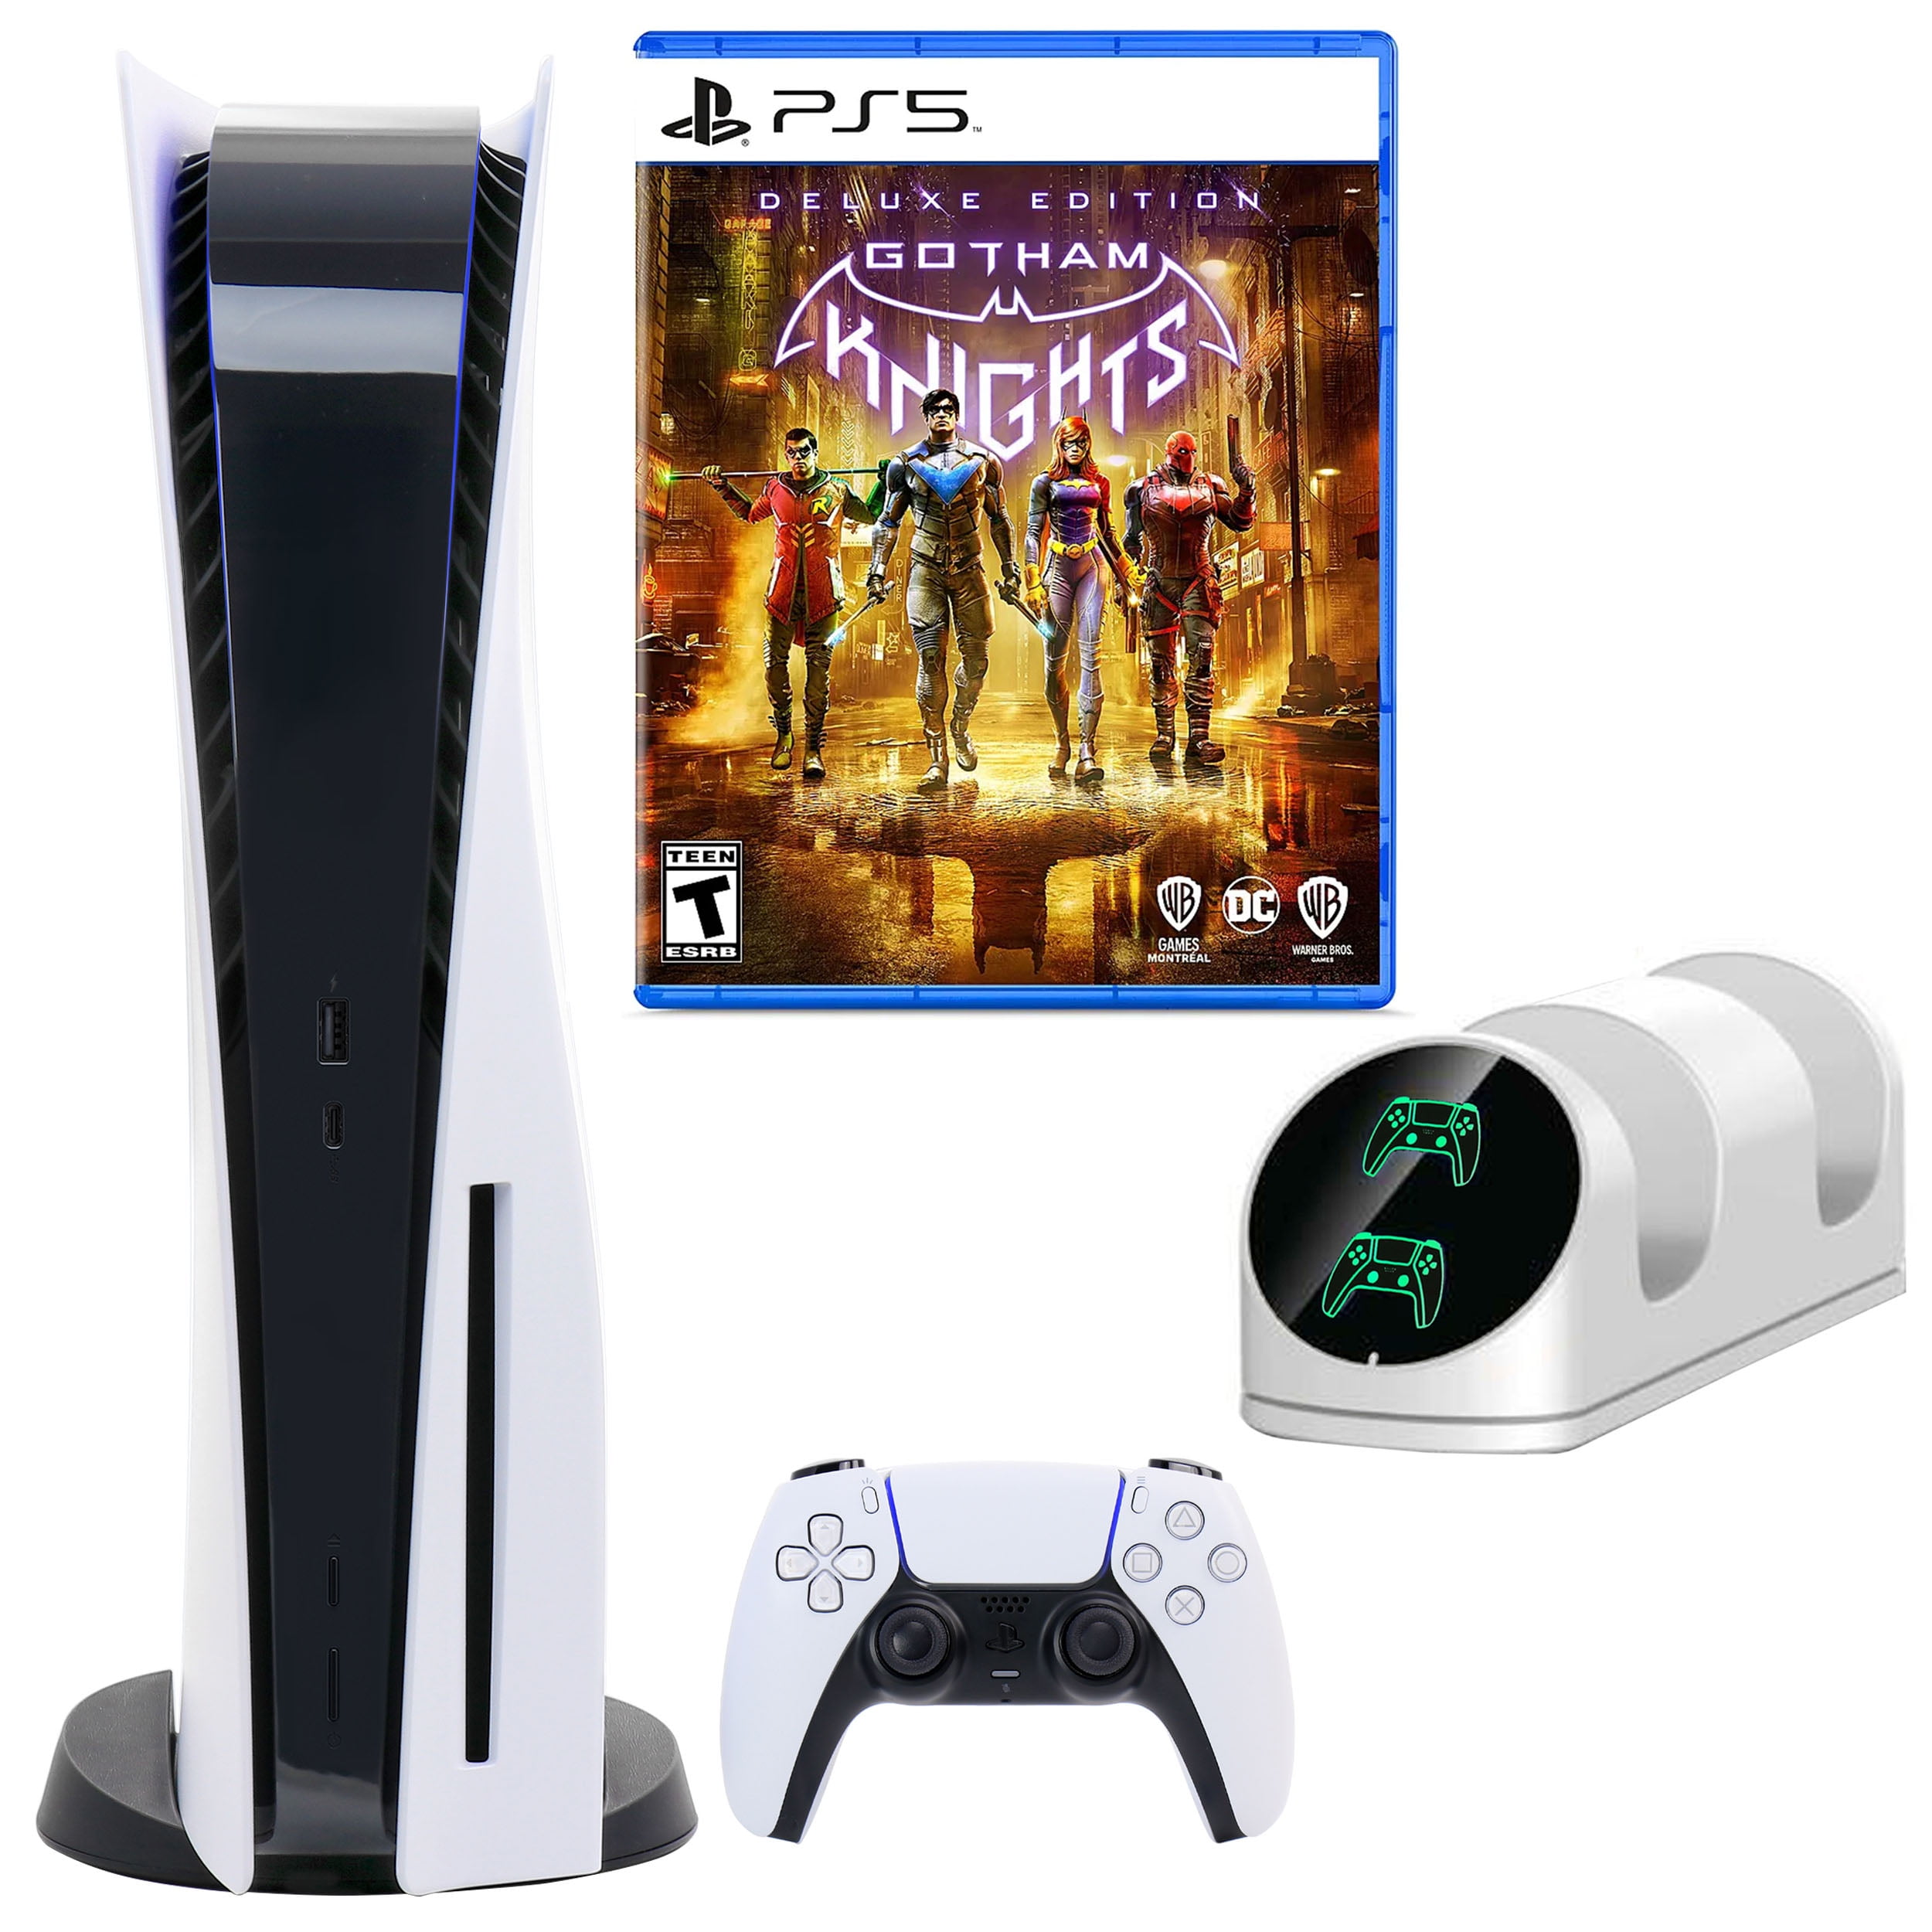 Gotham Knights - PS5 | PlayStation 5 | GameStop